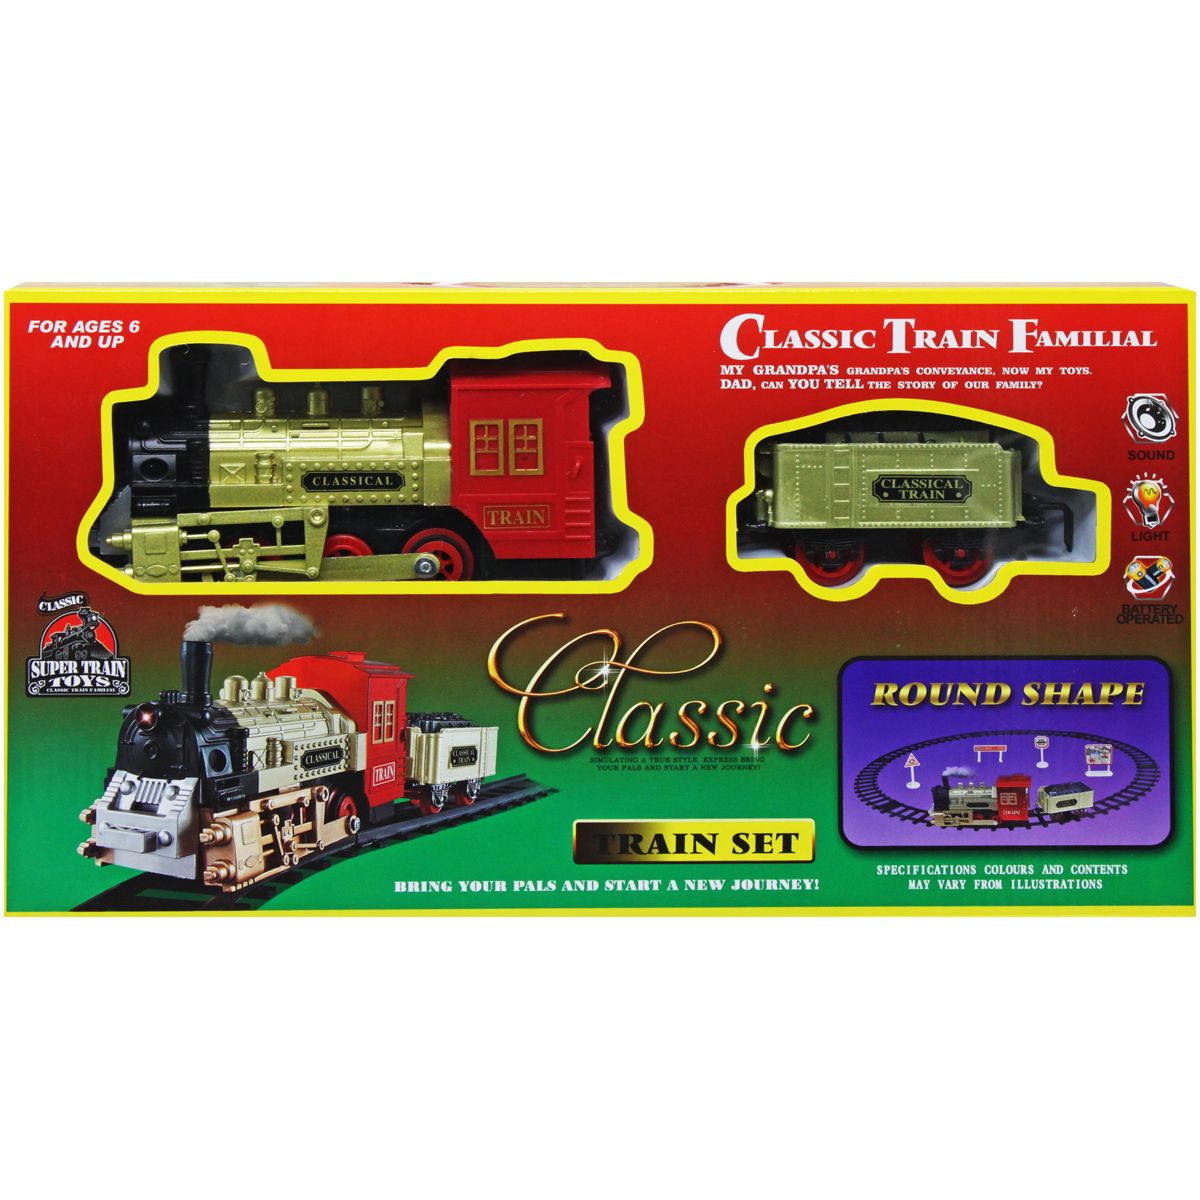 Железная дорога "Classic Train Familial", 73 см, локомотив и вагон